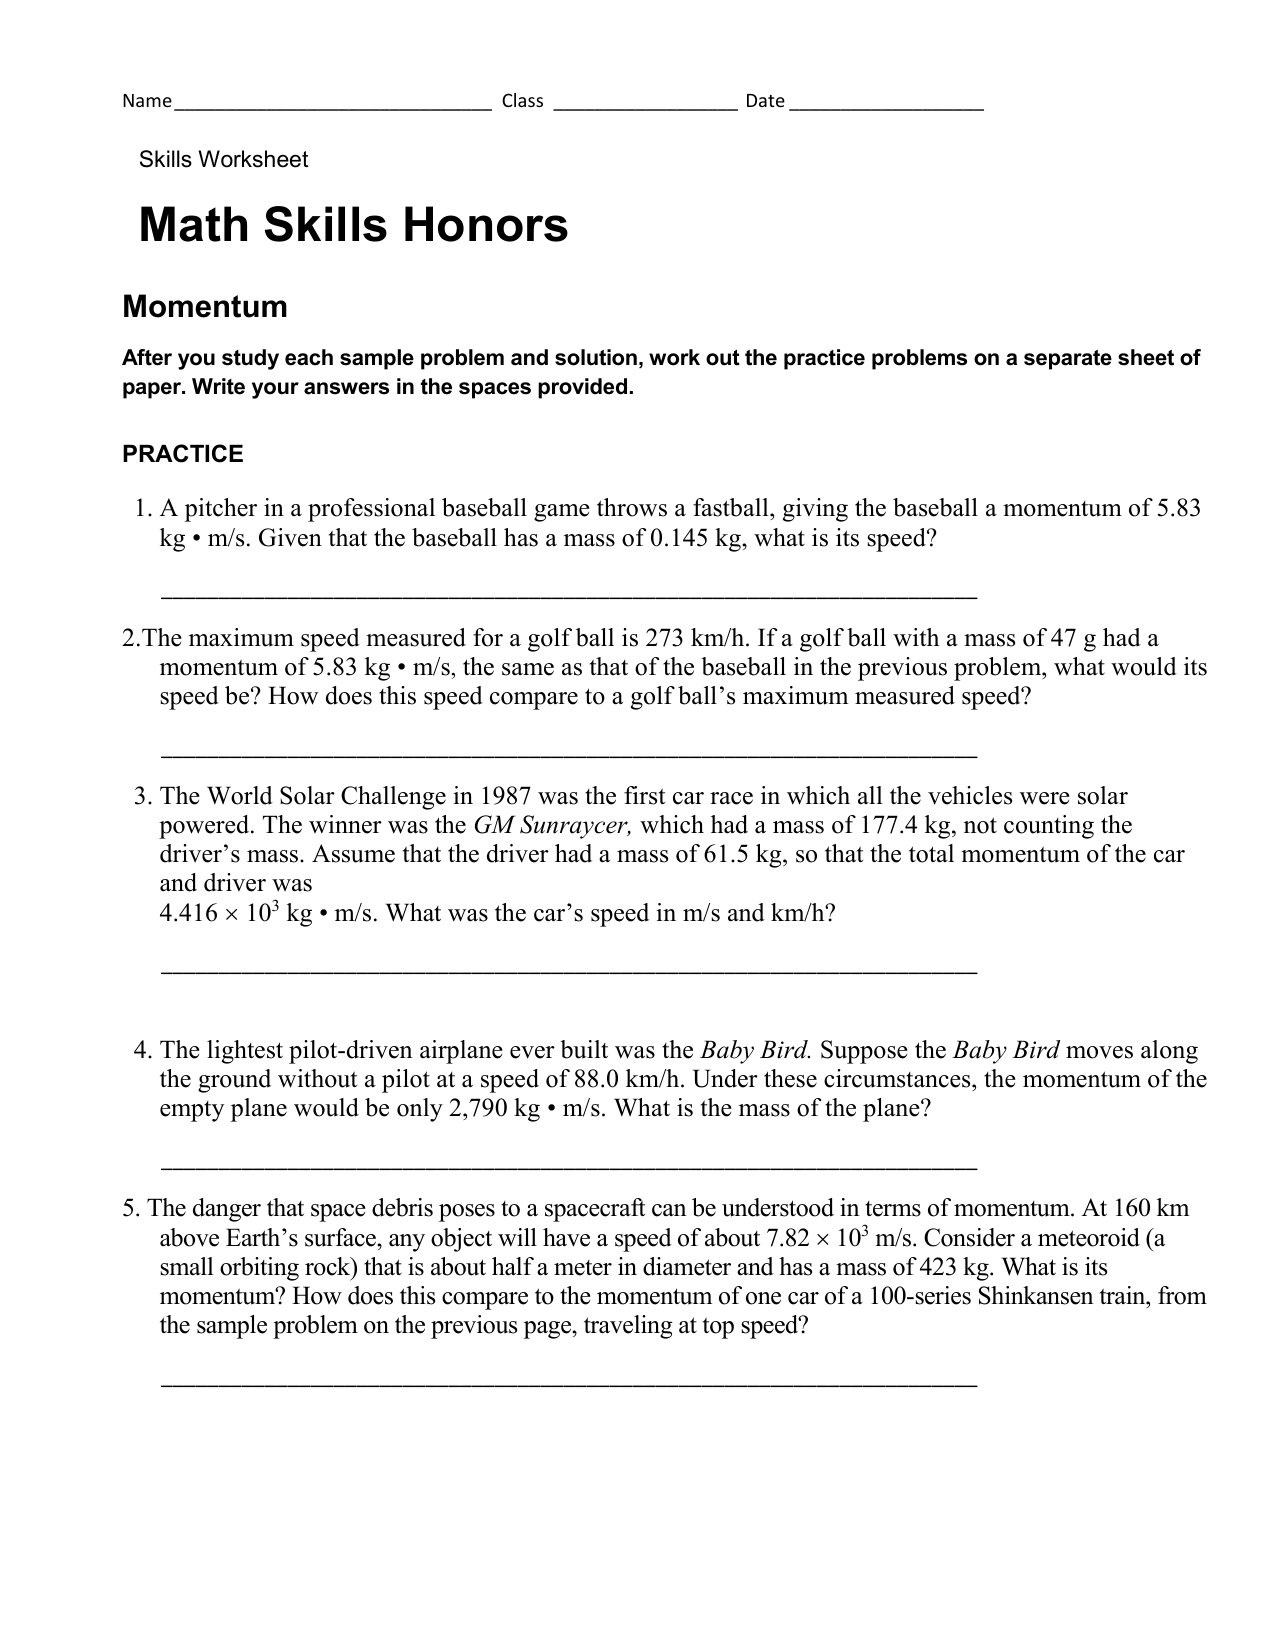 math_skills - momentum Regarding Momentum Worksheet Answer Key